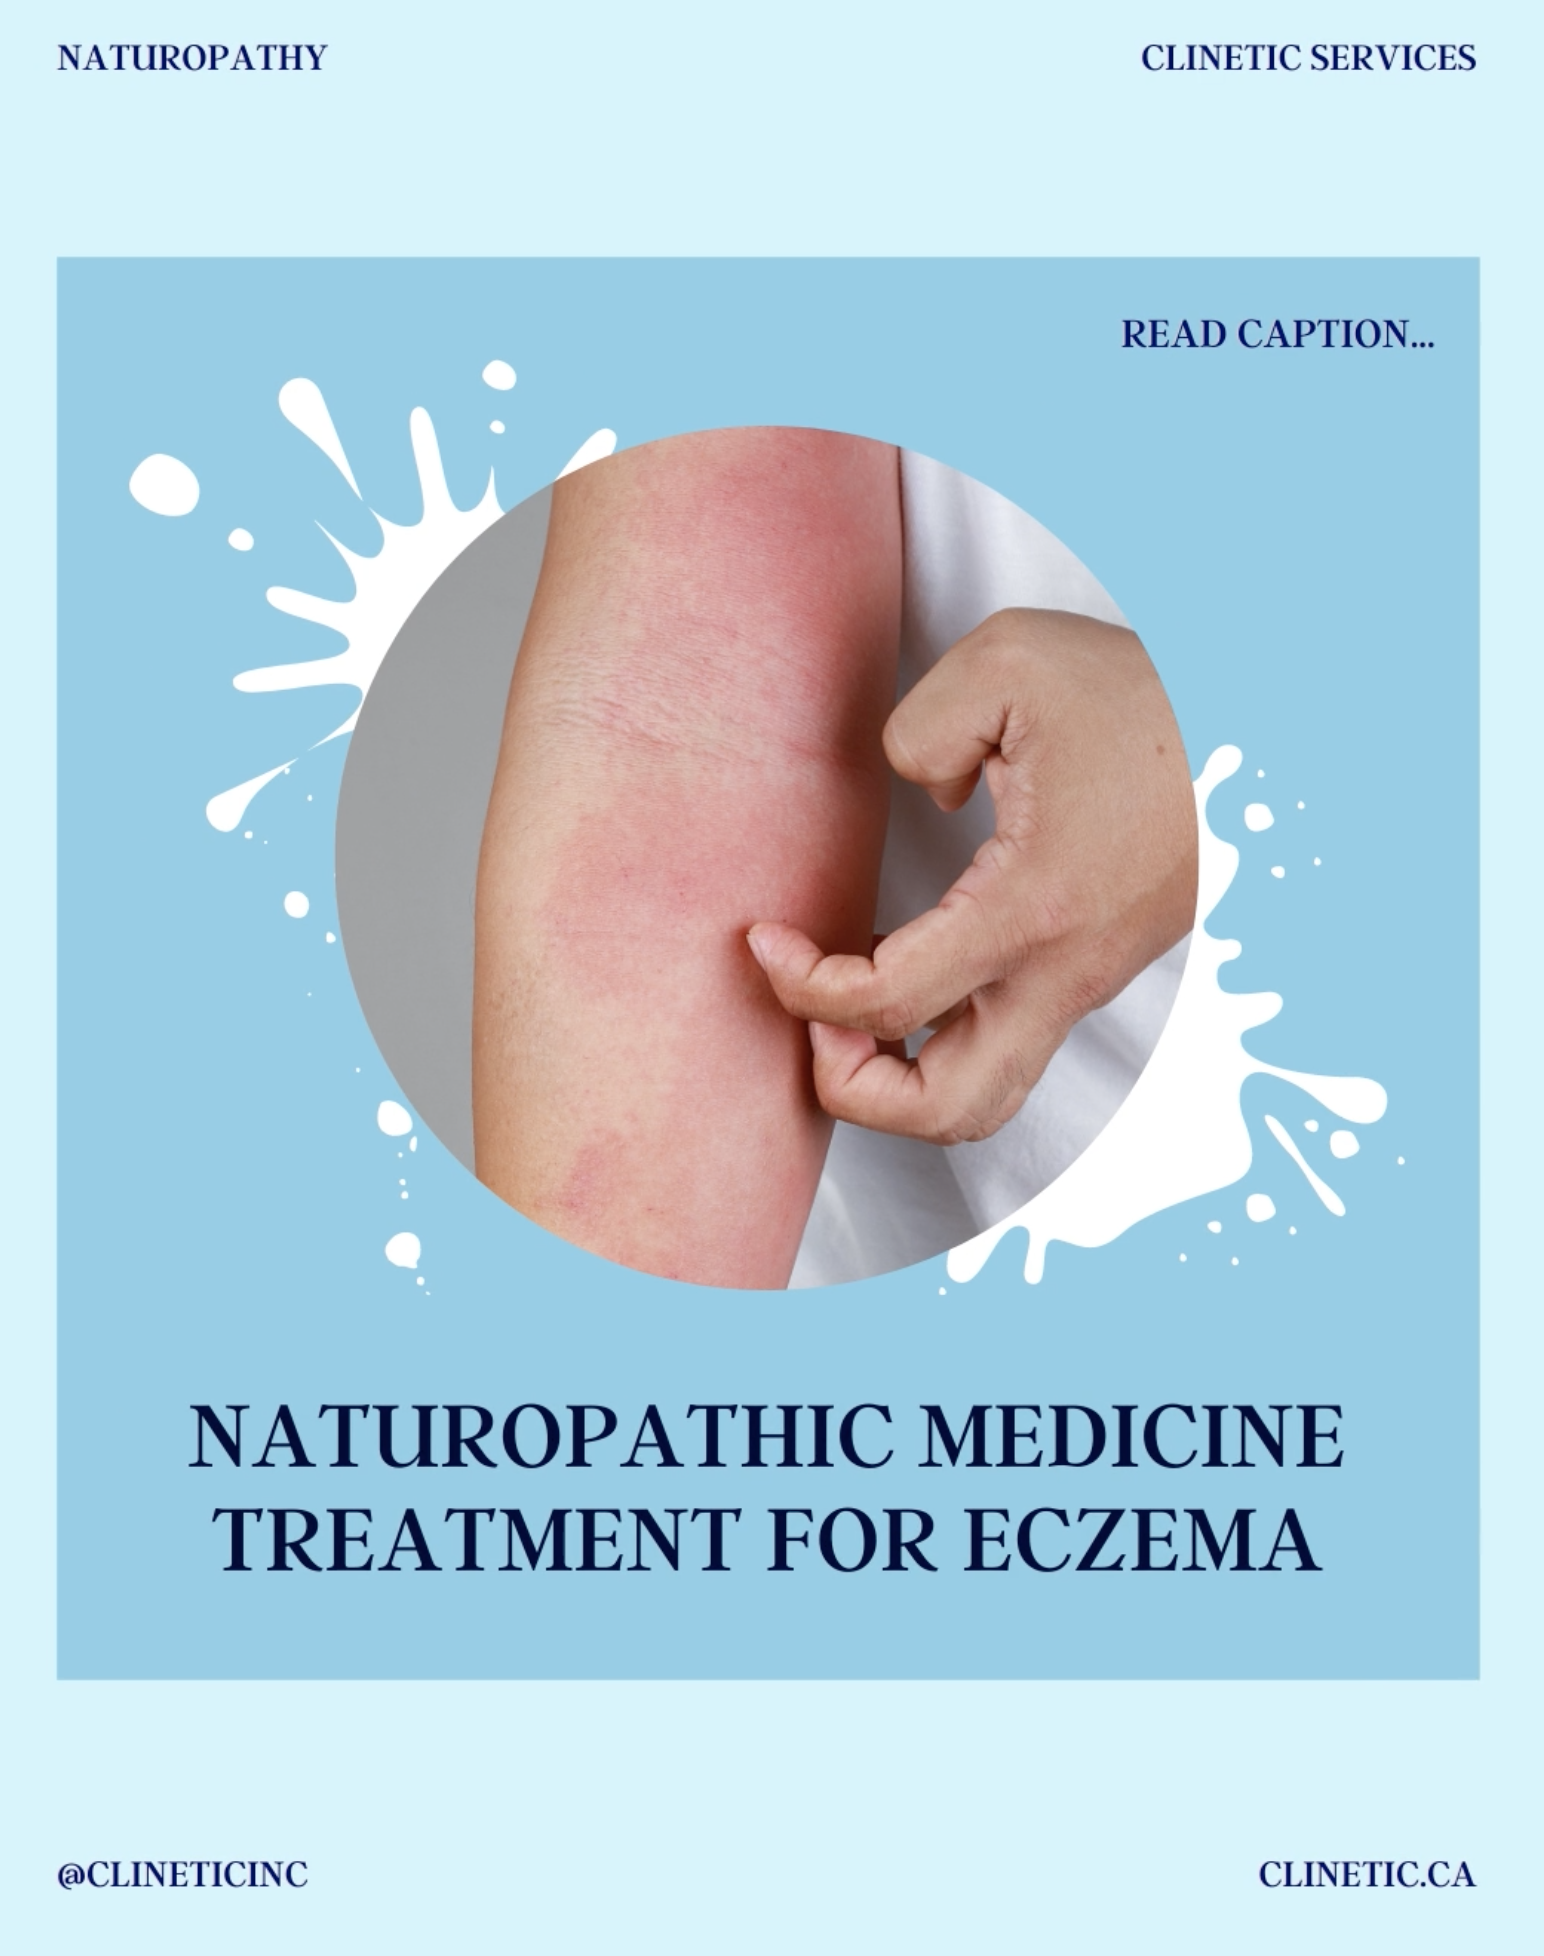 Naturopathic medicine treatment for Eczema